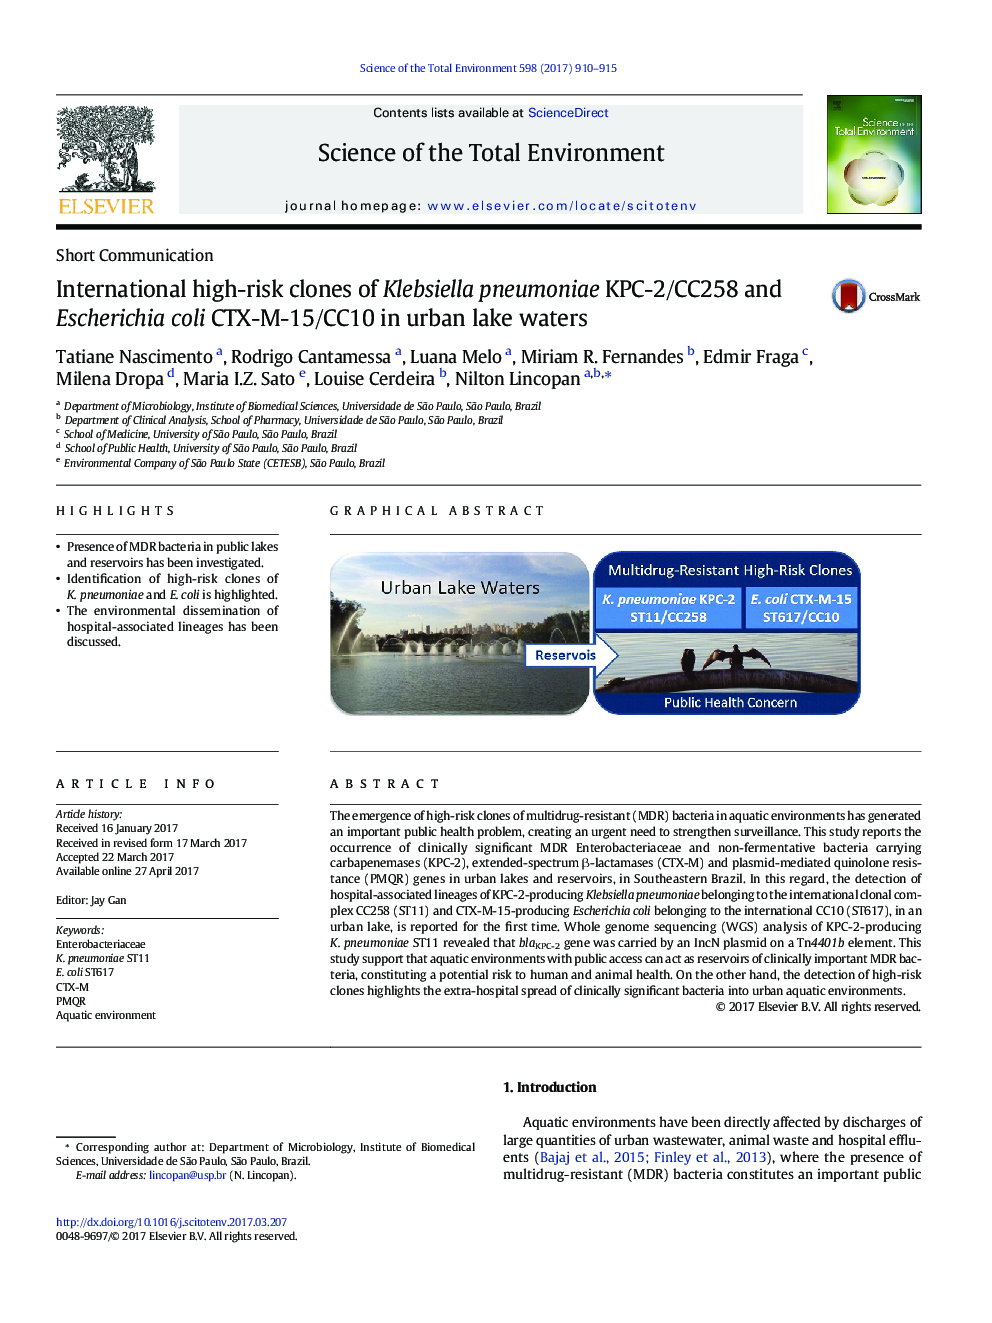 Short CommunicationInternational high-risk clones of Klebsiella pneumoniae KPC-2/CC258 and Escherichia coli CTX-M-15/CC10 in urban lake waters